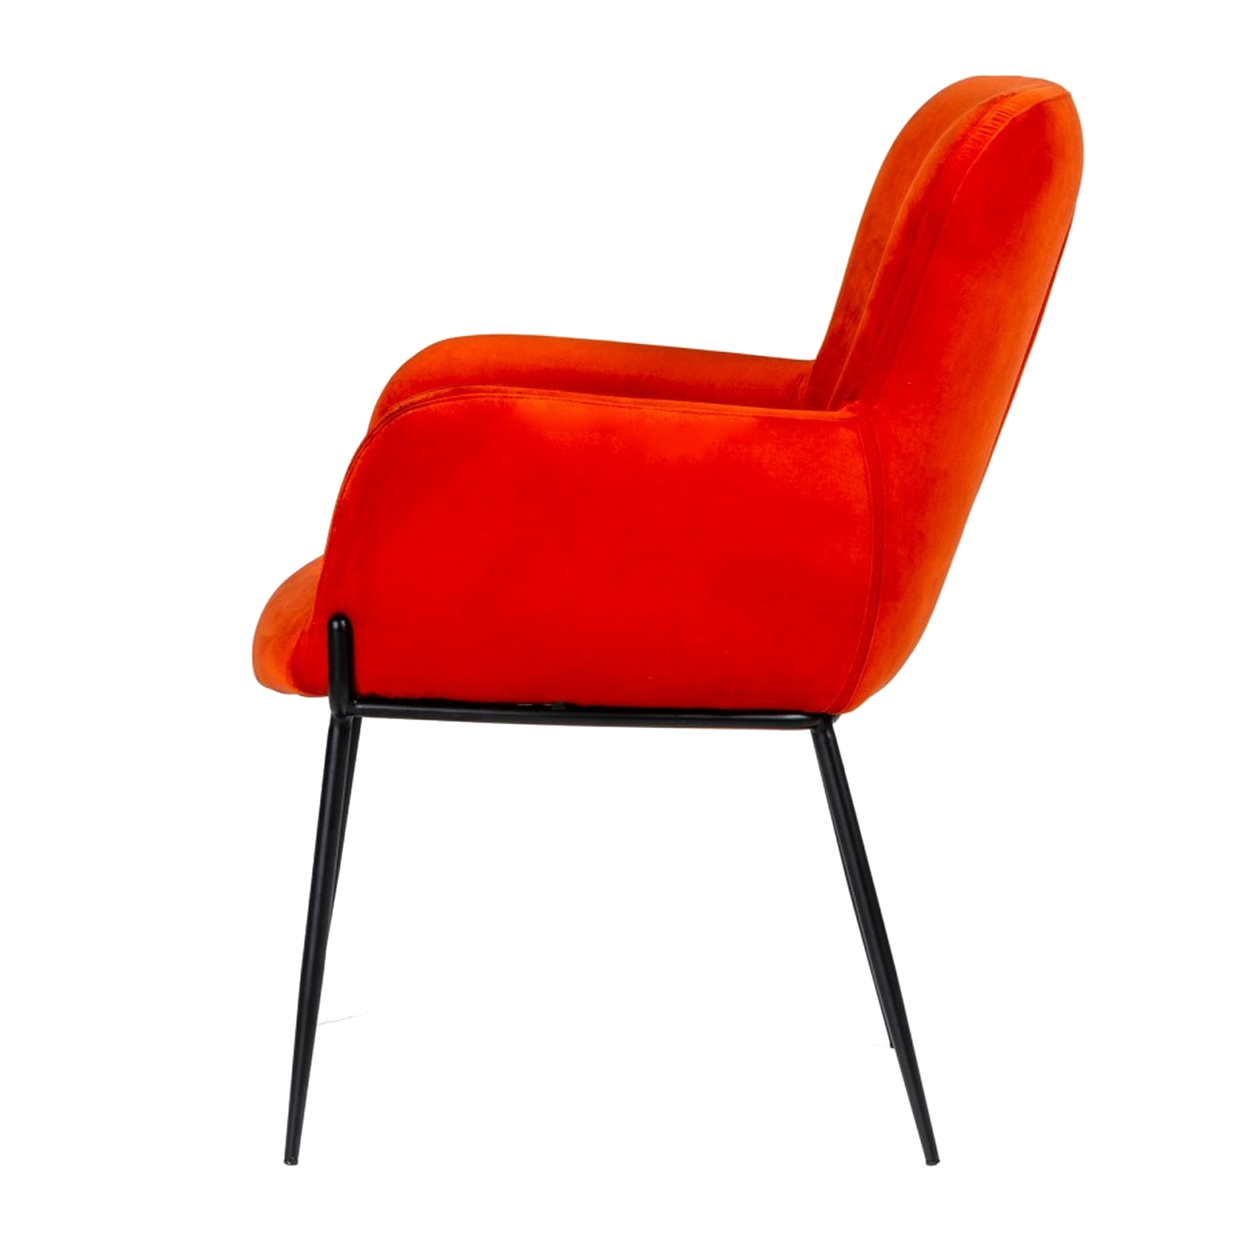 Curved Design Fabric Dining Chair With Sleek Tapered Legs, Orange- Saltoro Sherpi